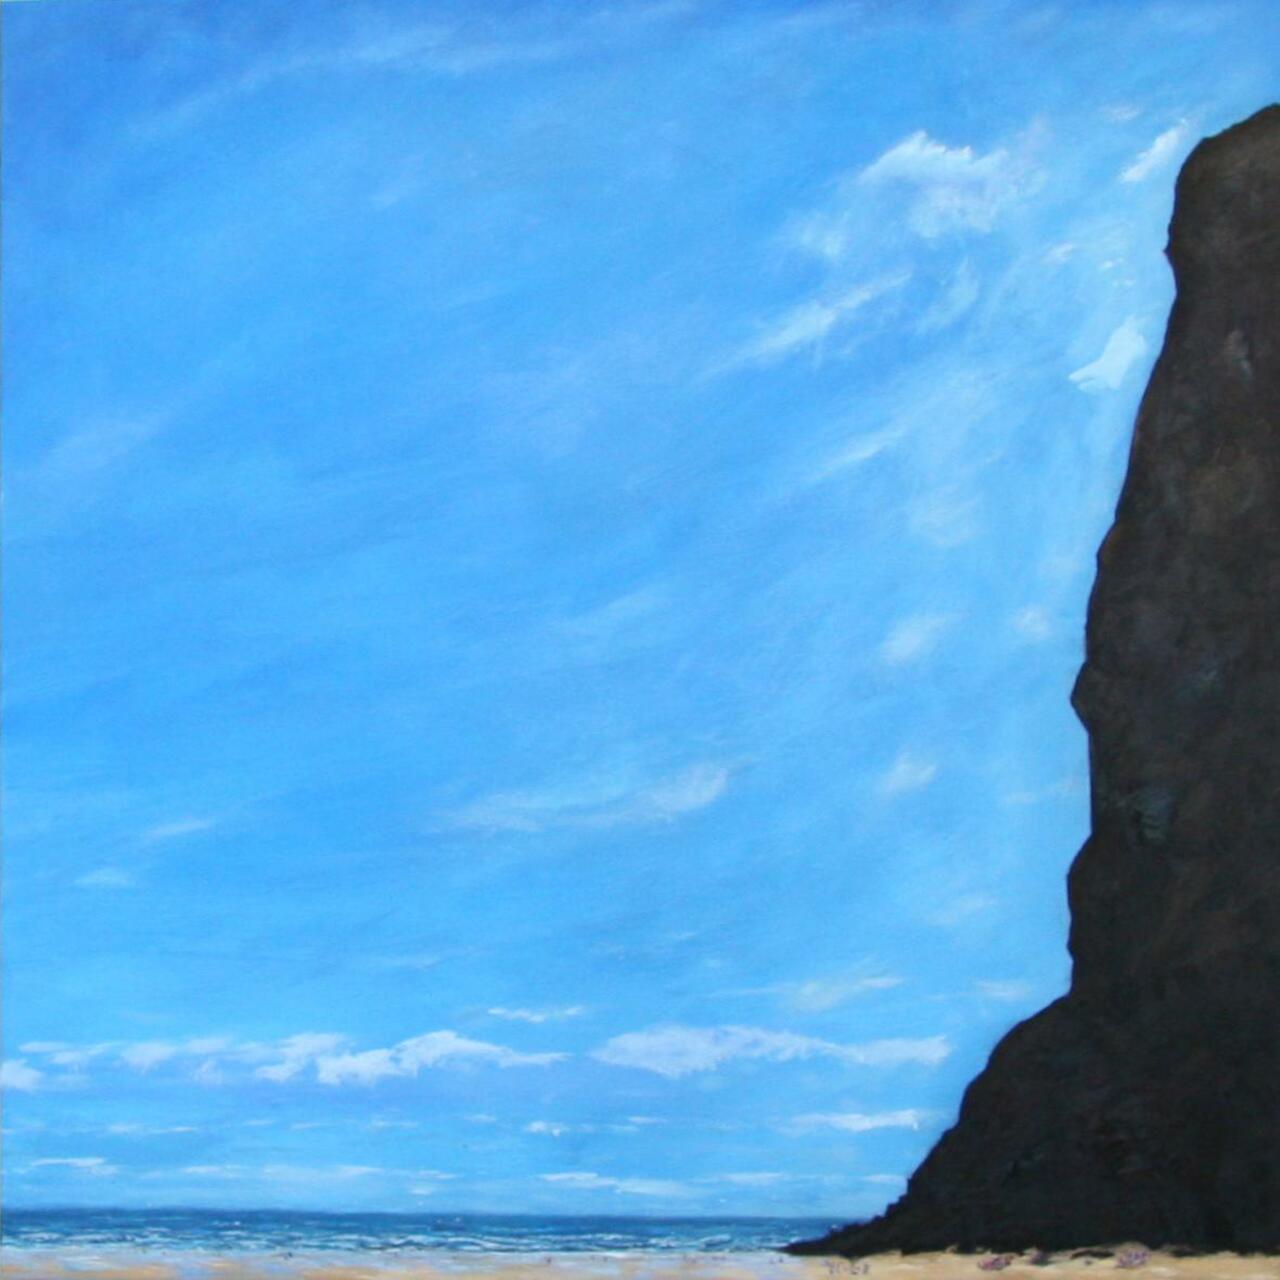 #DuchyBizHour

#art #gallery @weecornish promoting #cornwall http://www.littlecornishkitchen.com 

"Western Beach Rocks" http://t.co/pJRzue7NzY